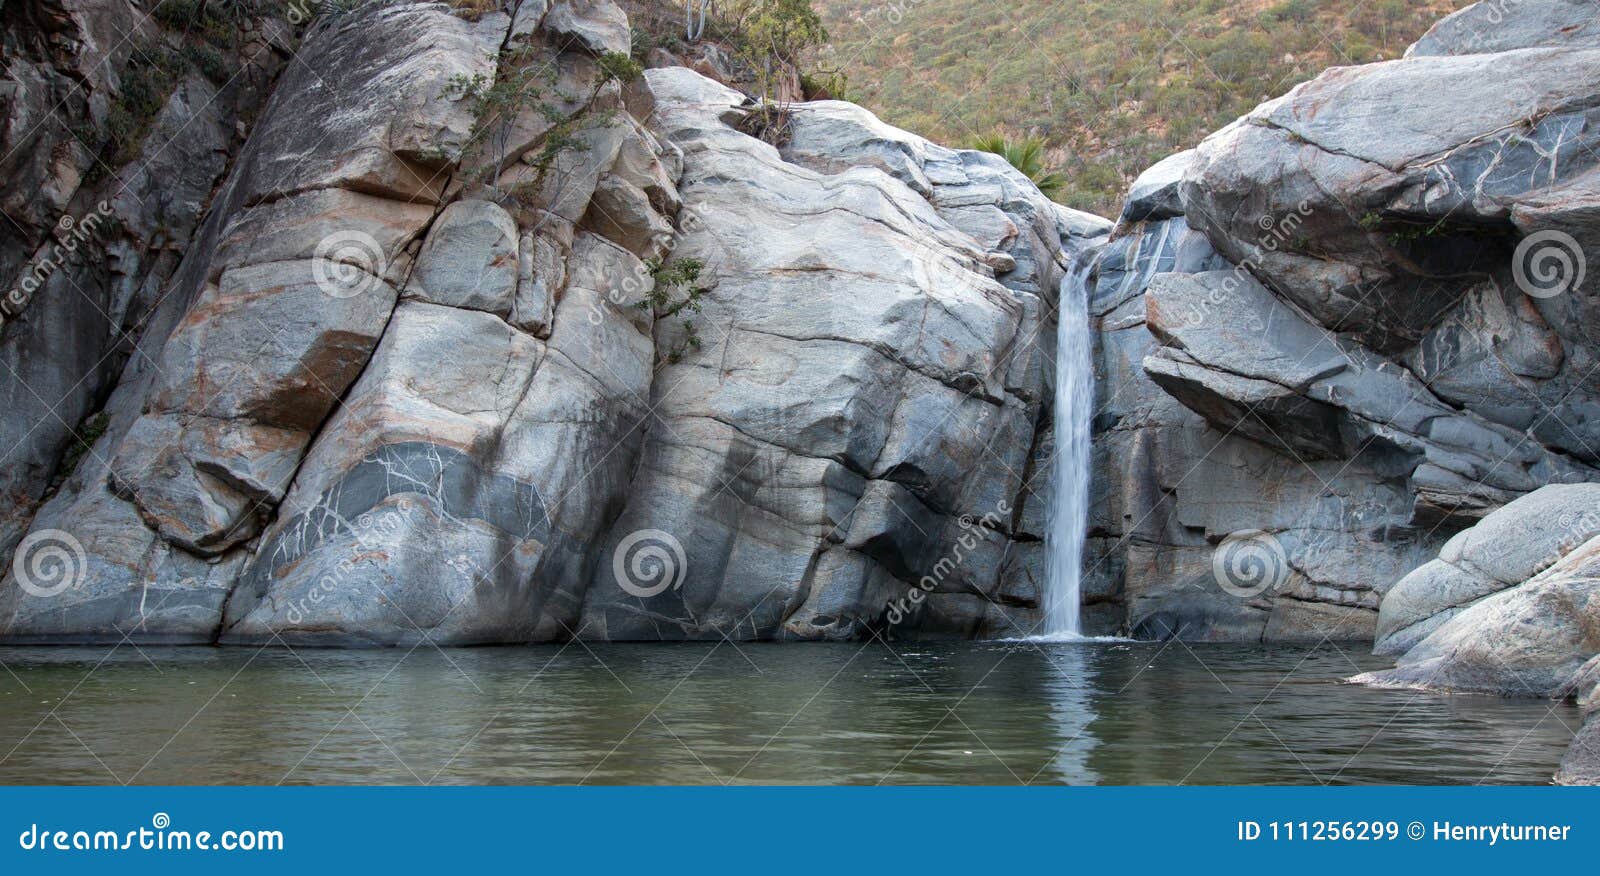 waterfall and natural swimming pool at cascada sol del mayo on the baja california peninsula in mexico